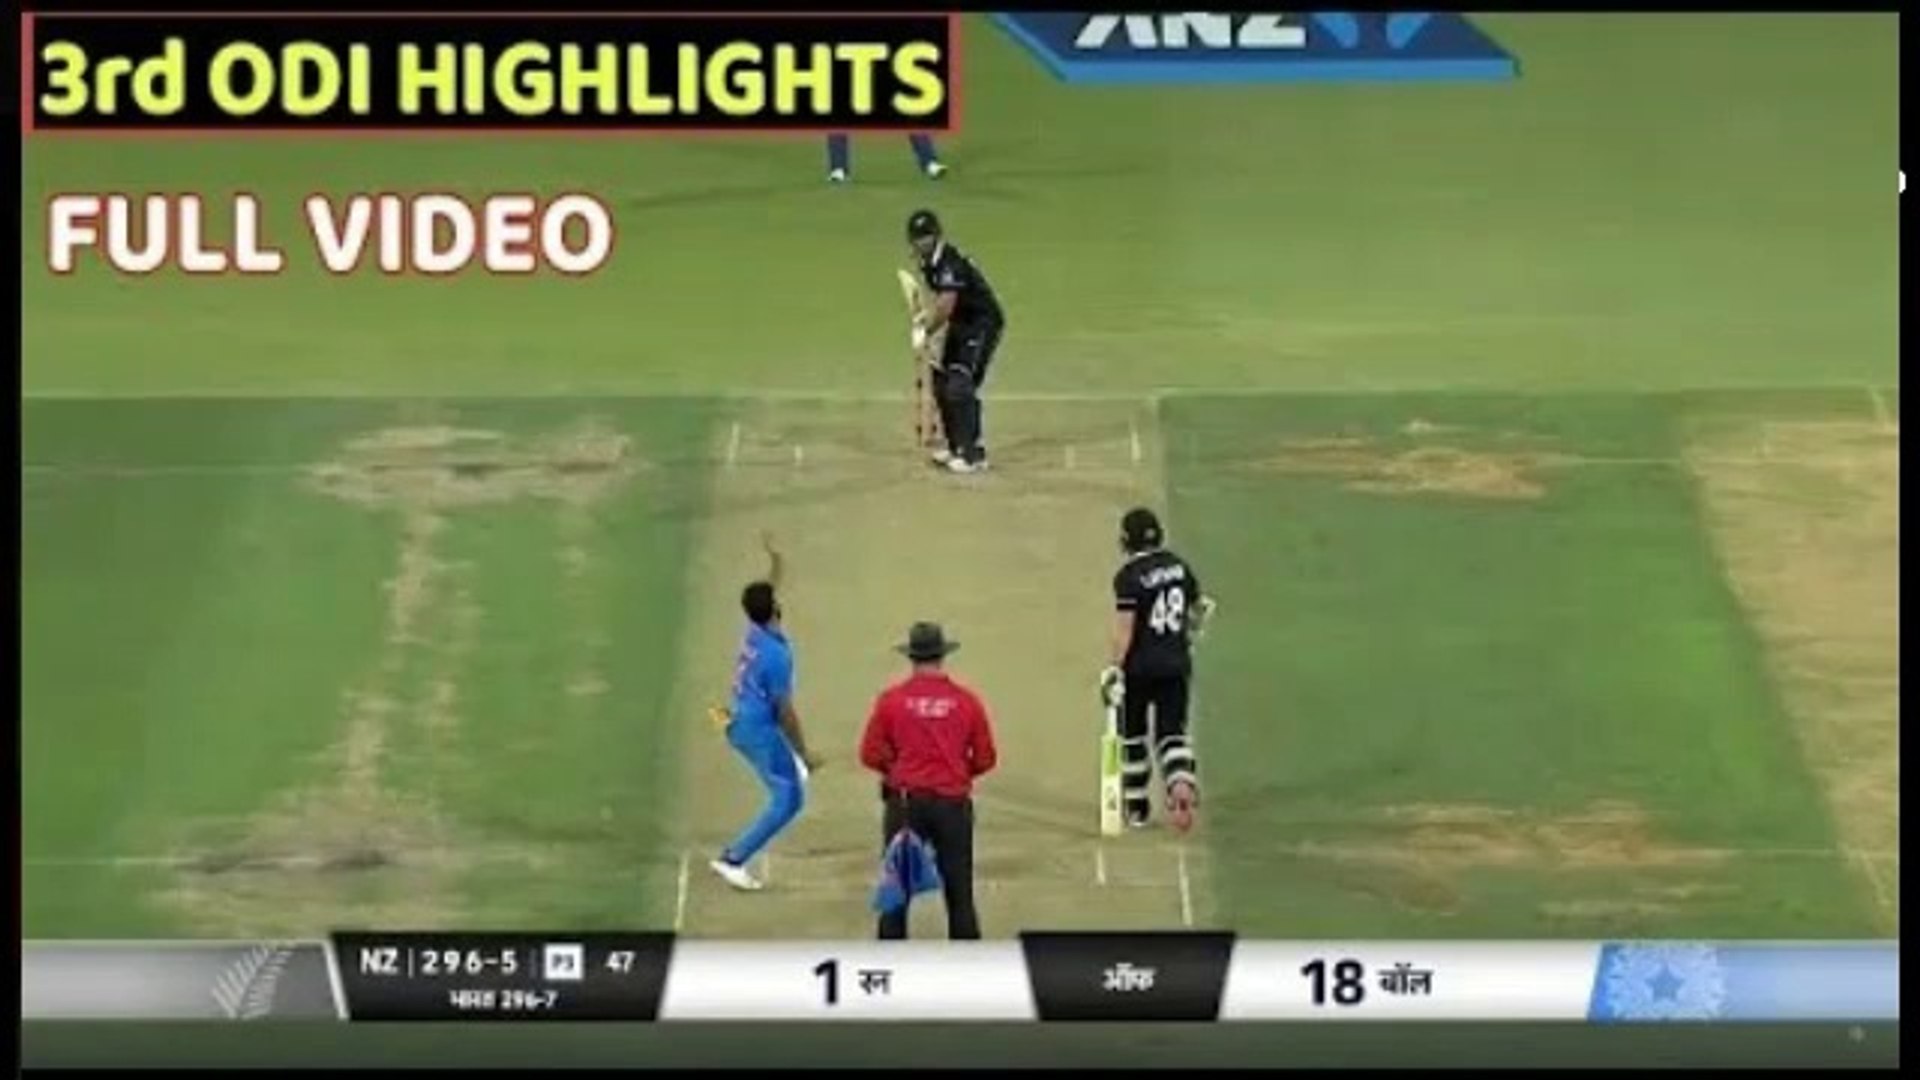 India Vs New Zealand 3rd ODI Match Full Match Highlights